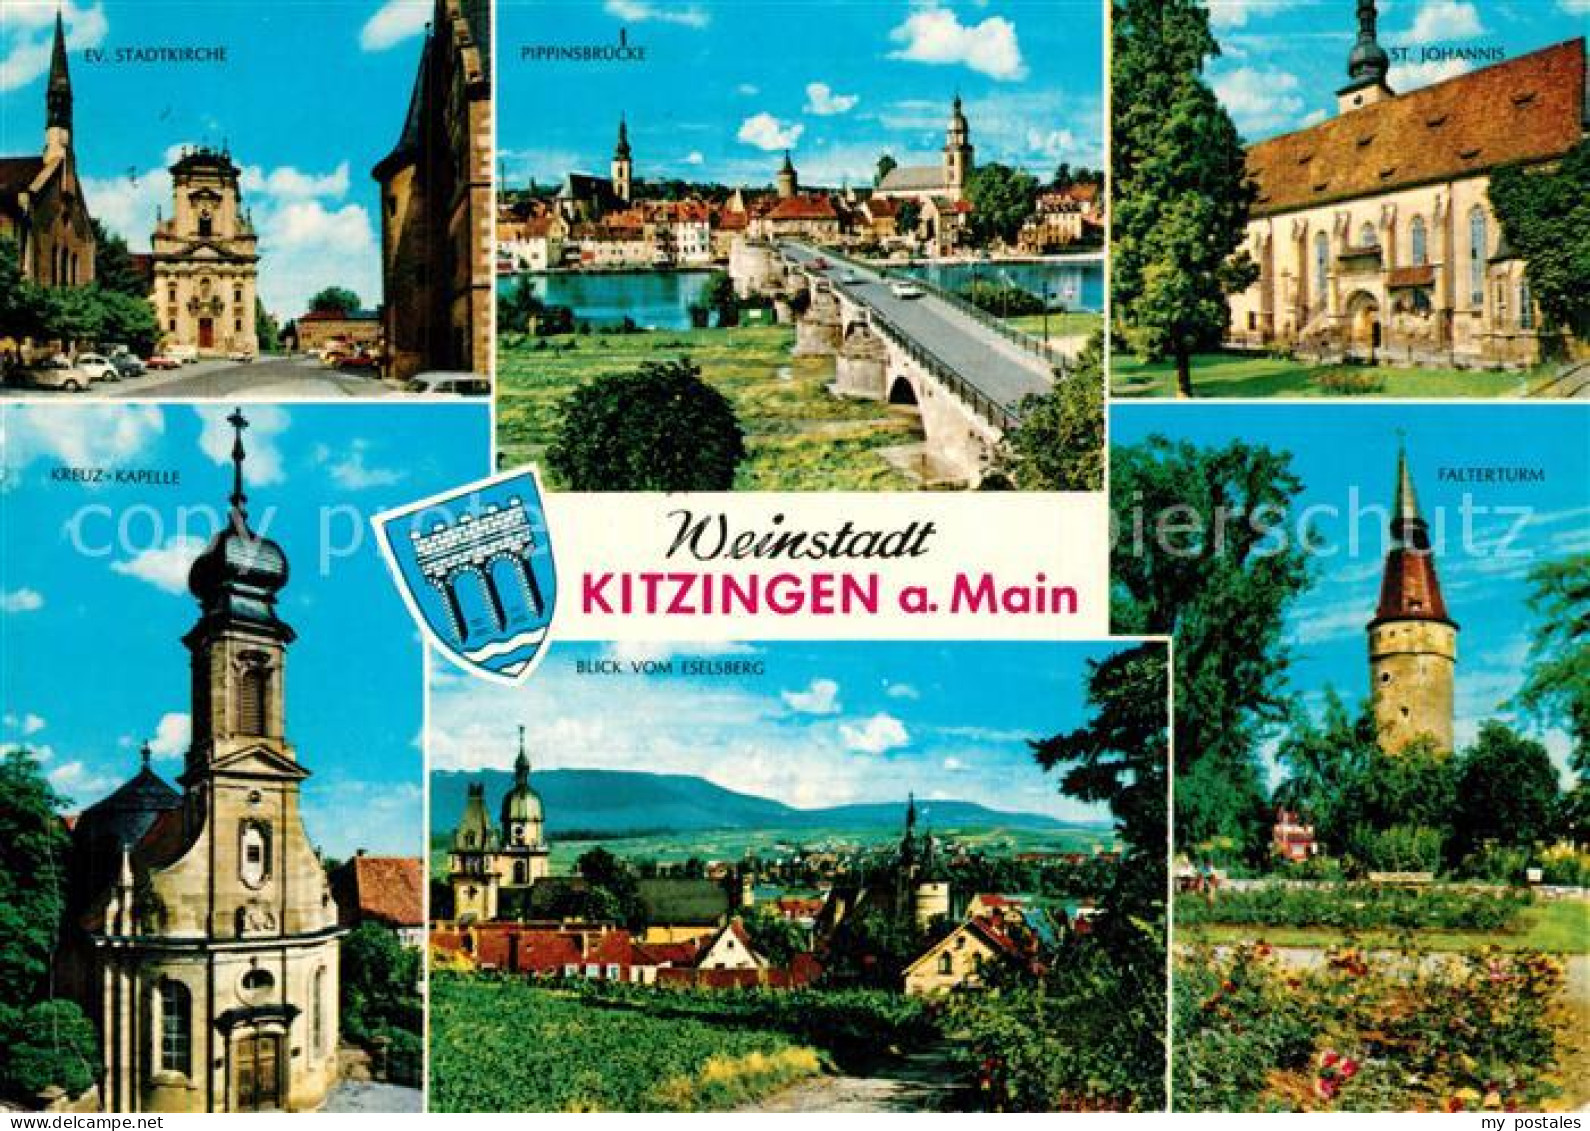 73596805 Kitzingen Main Ev Stadtkirche Pippinsbruecke St Johannes Kreuz Kapelle  - Kitzingen